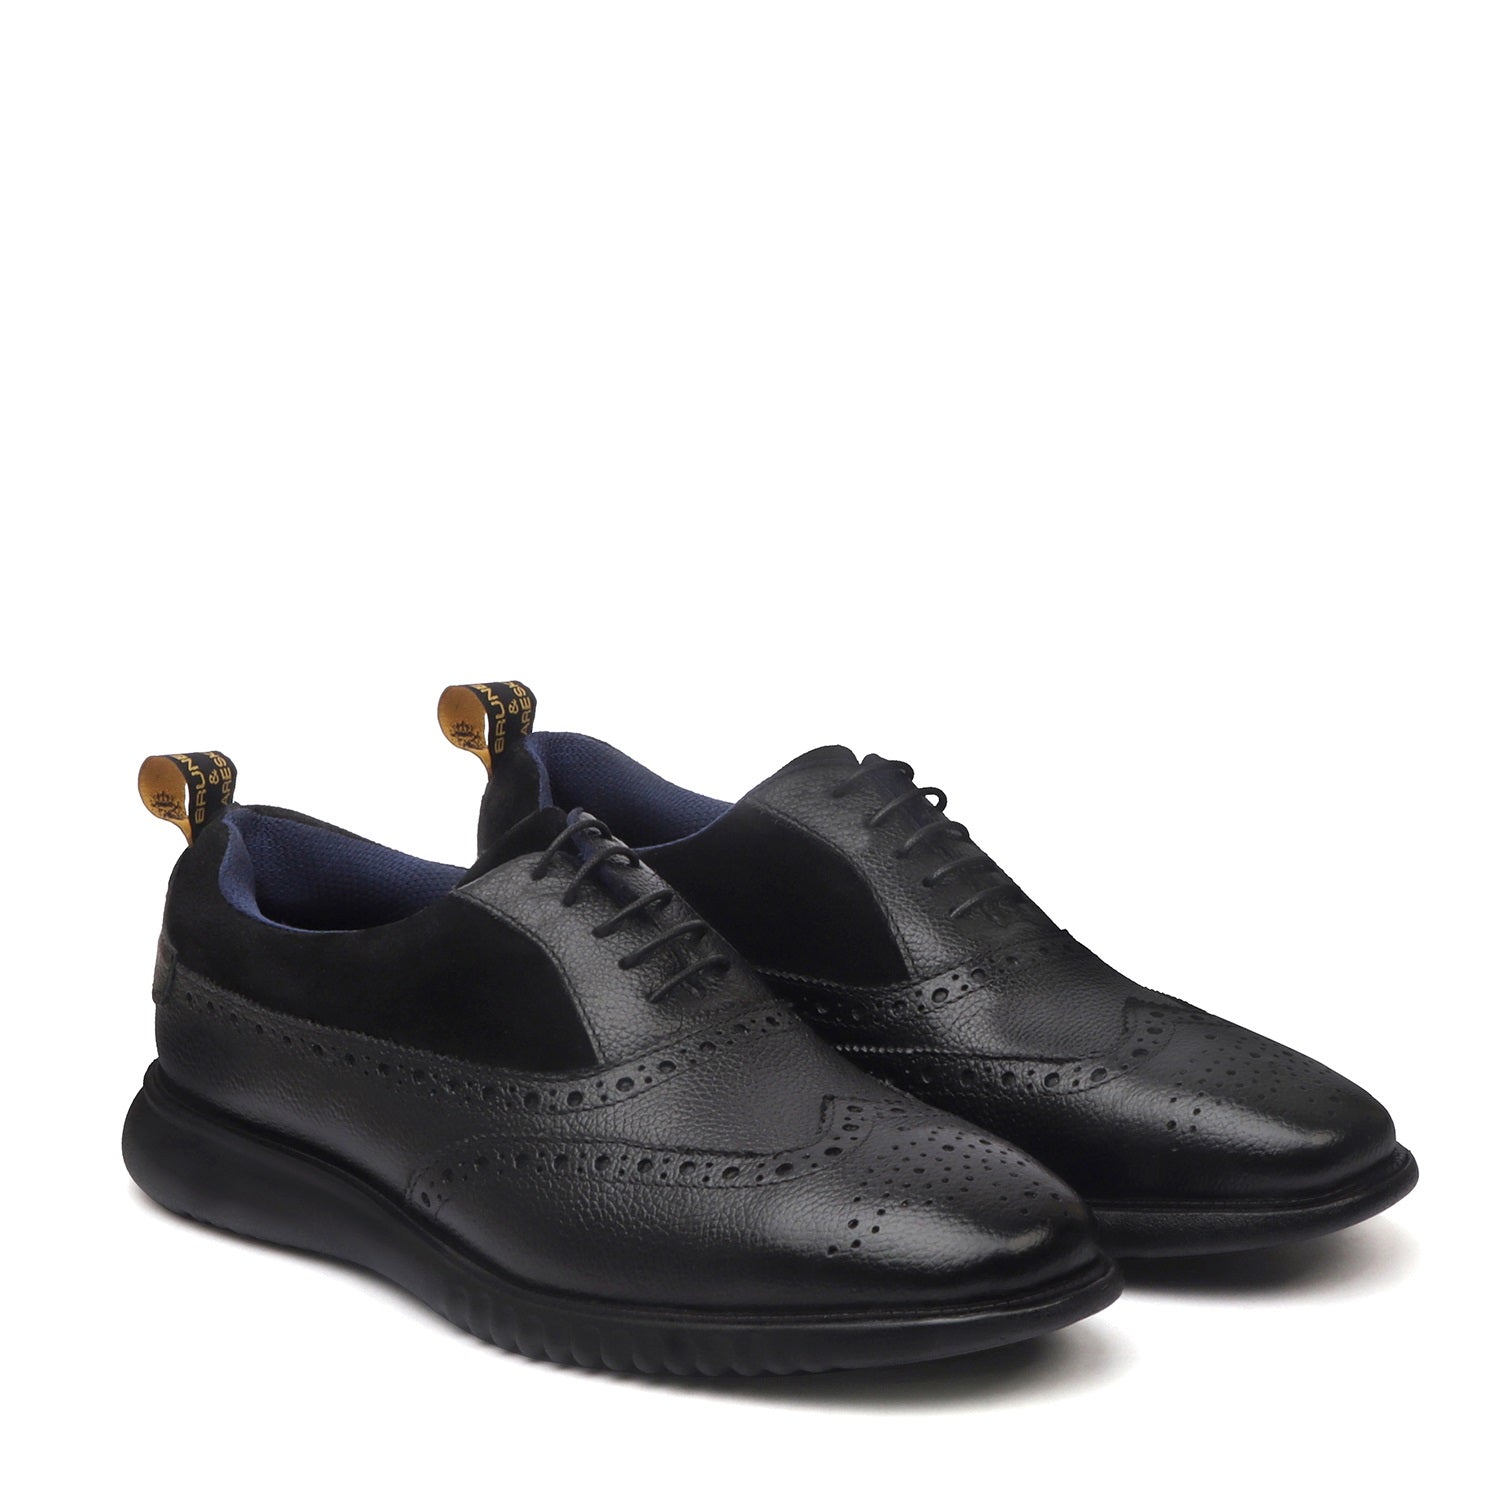 Black Leather Black Velvet Light Weight Dress Sneaker Brogue Oxford Shoe For Men by Brune & Bareskin